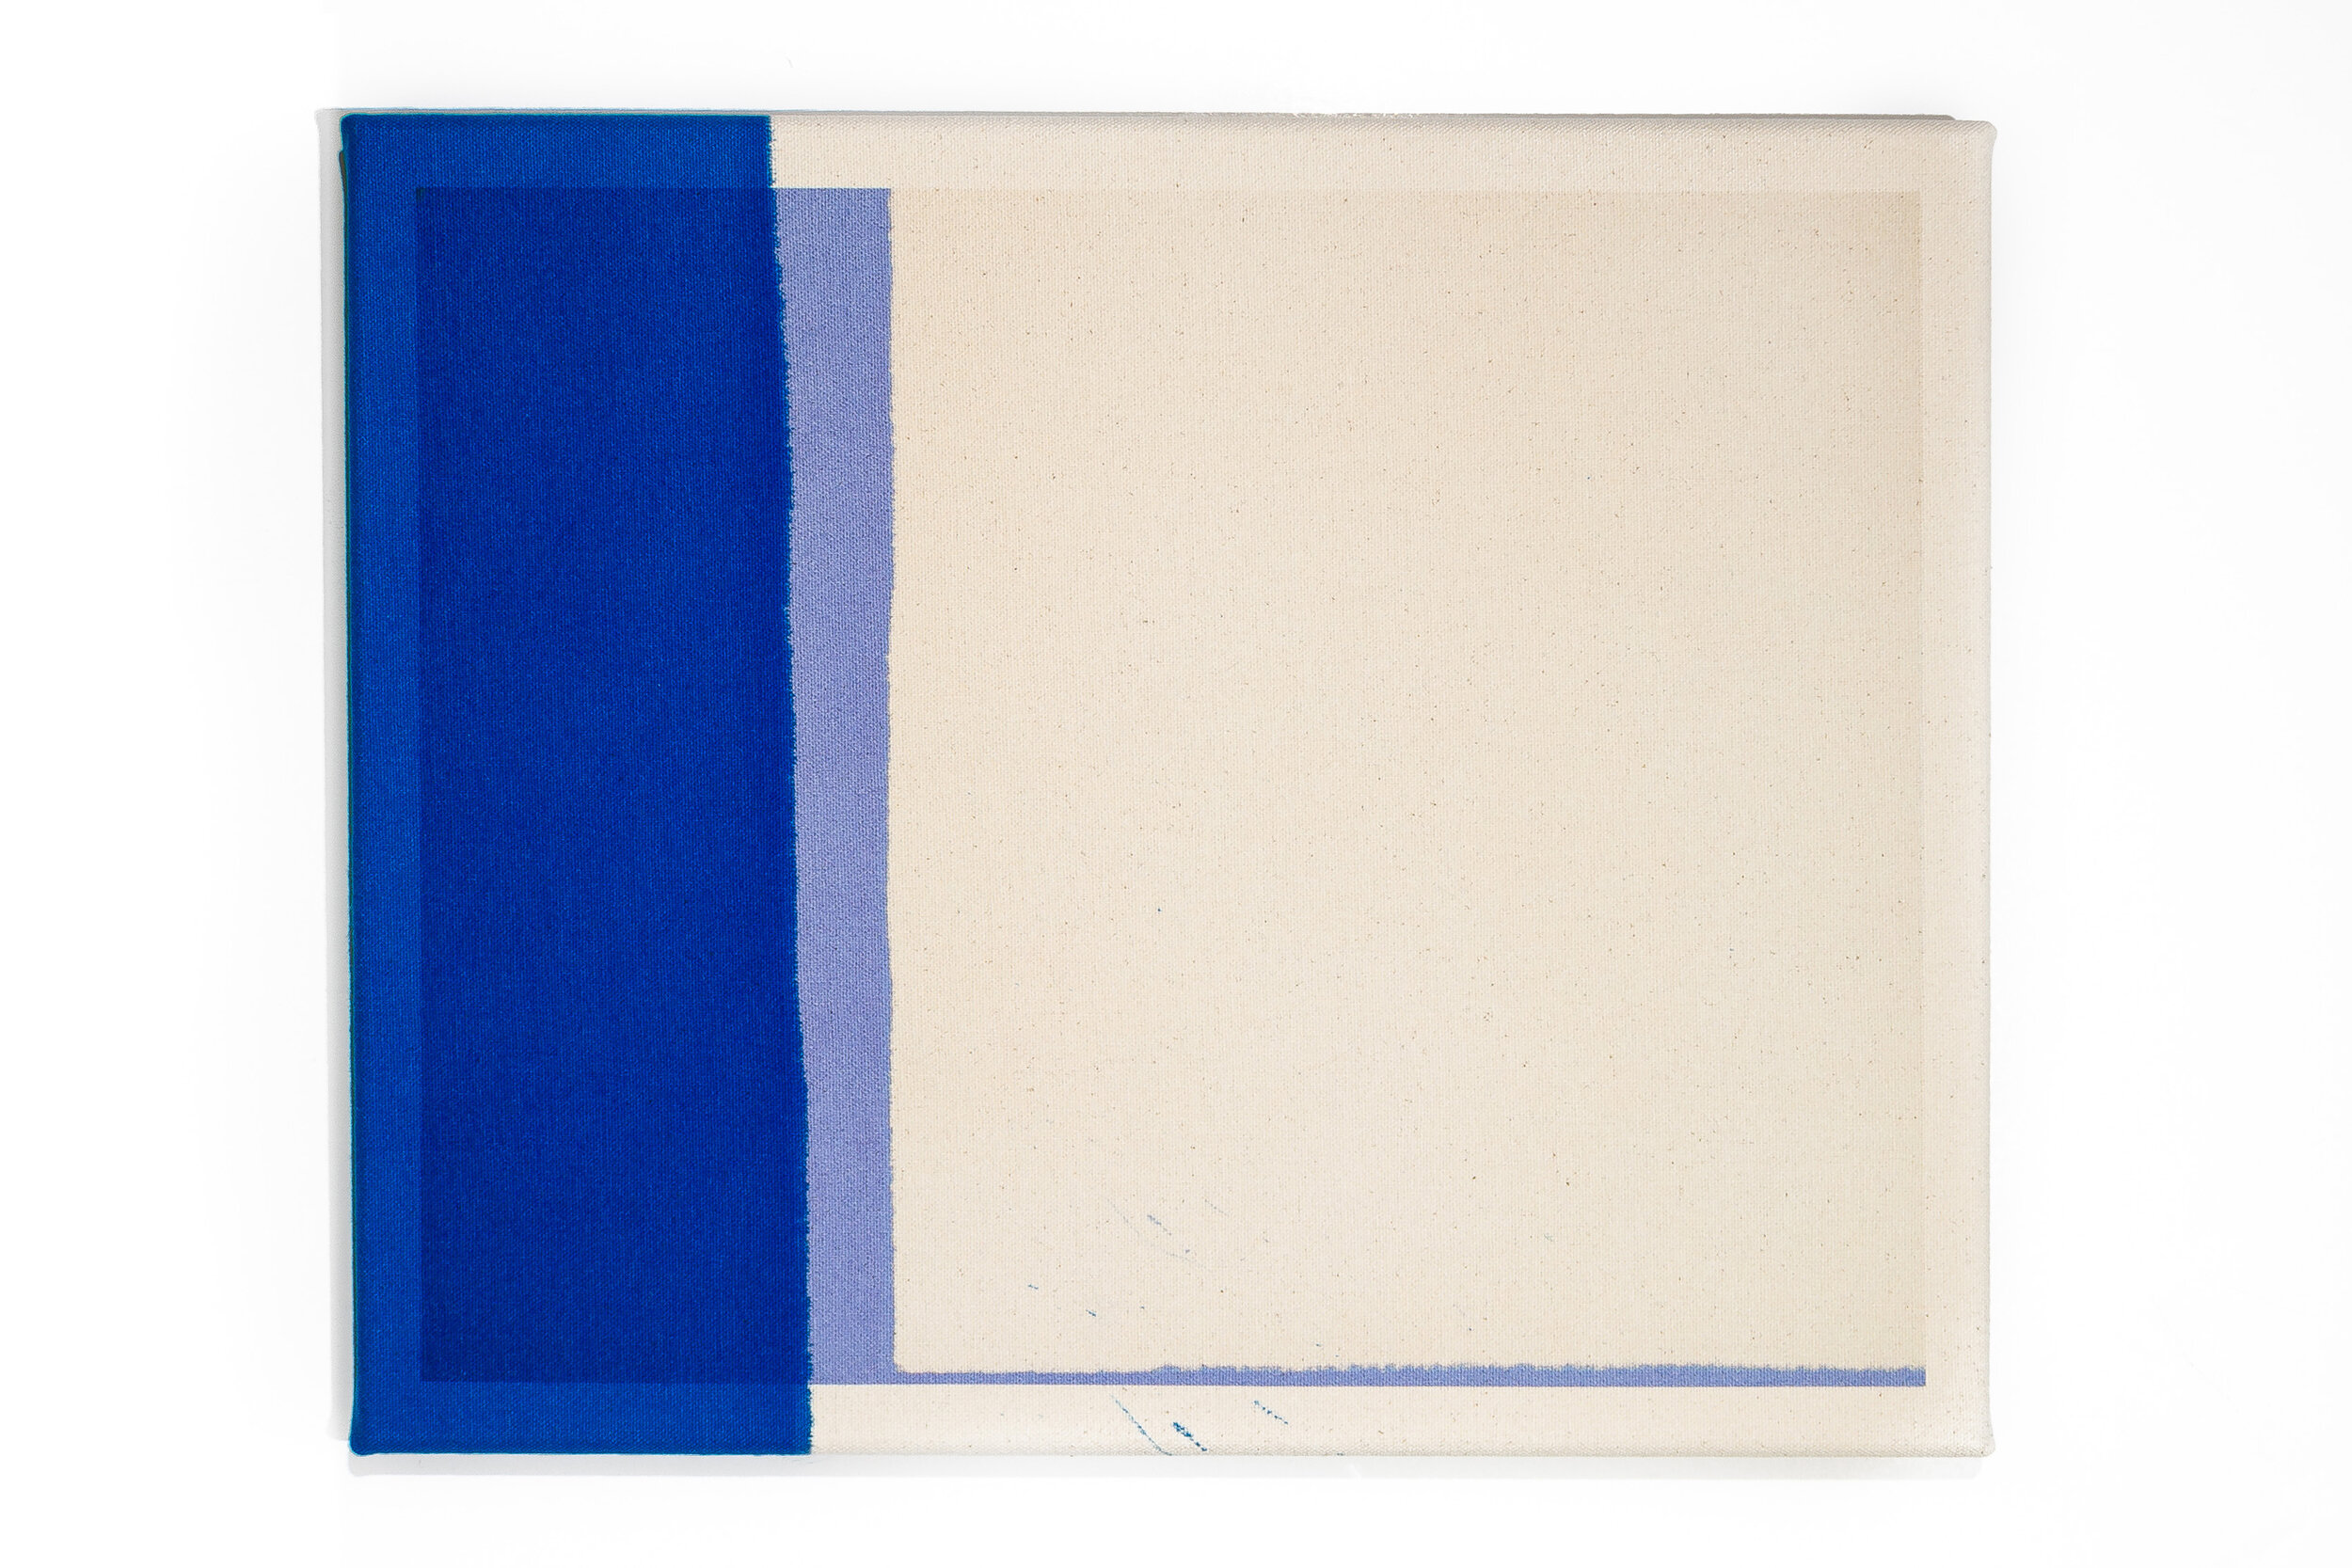   Underlay, blue, 2019 Inkjet print and inkjet ink on canvas  38 x 31.5 cm 